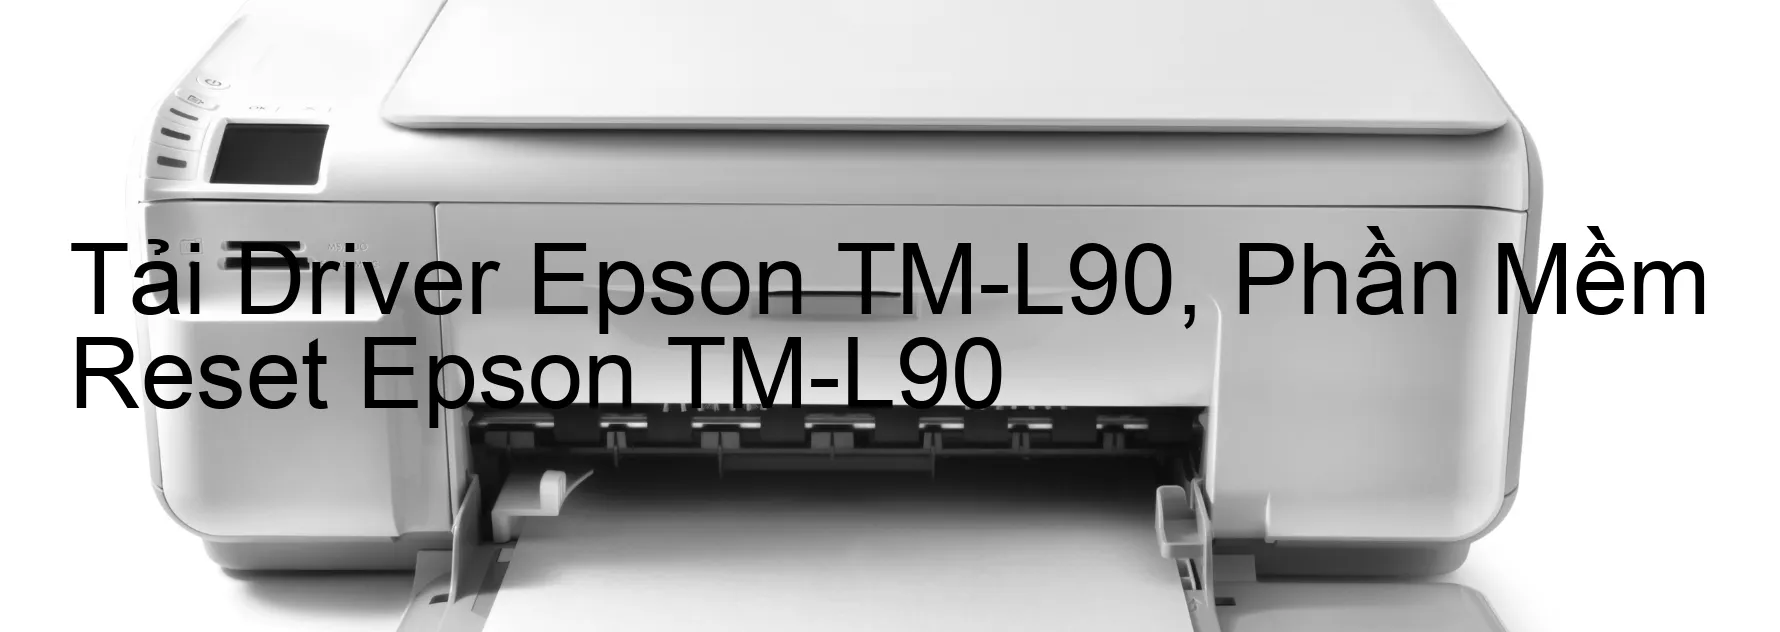 Driver Epson TM-L90, Phần Mềm Reset Epson TM-L90